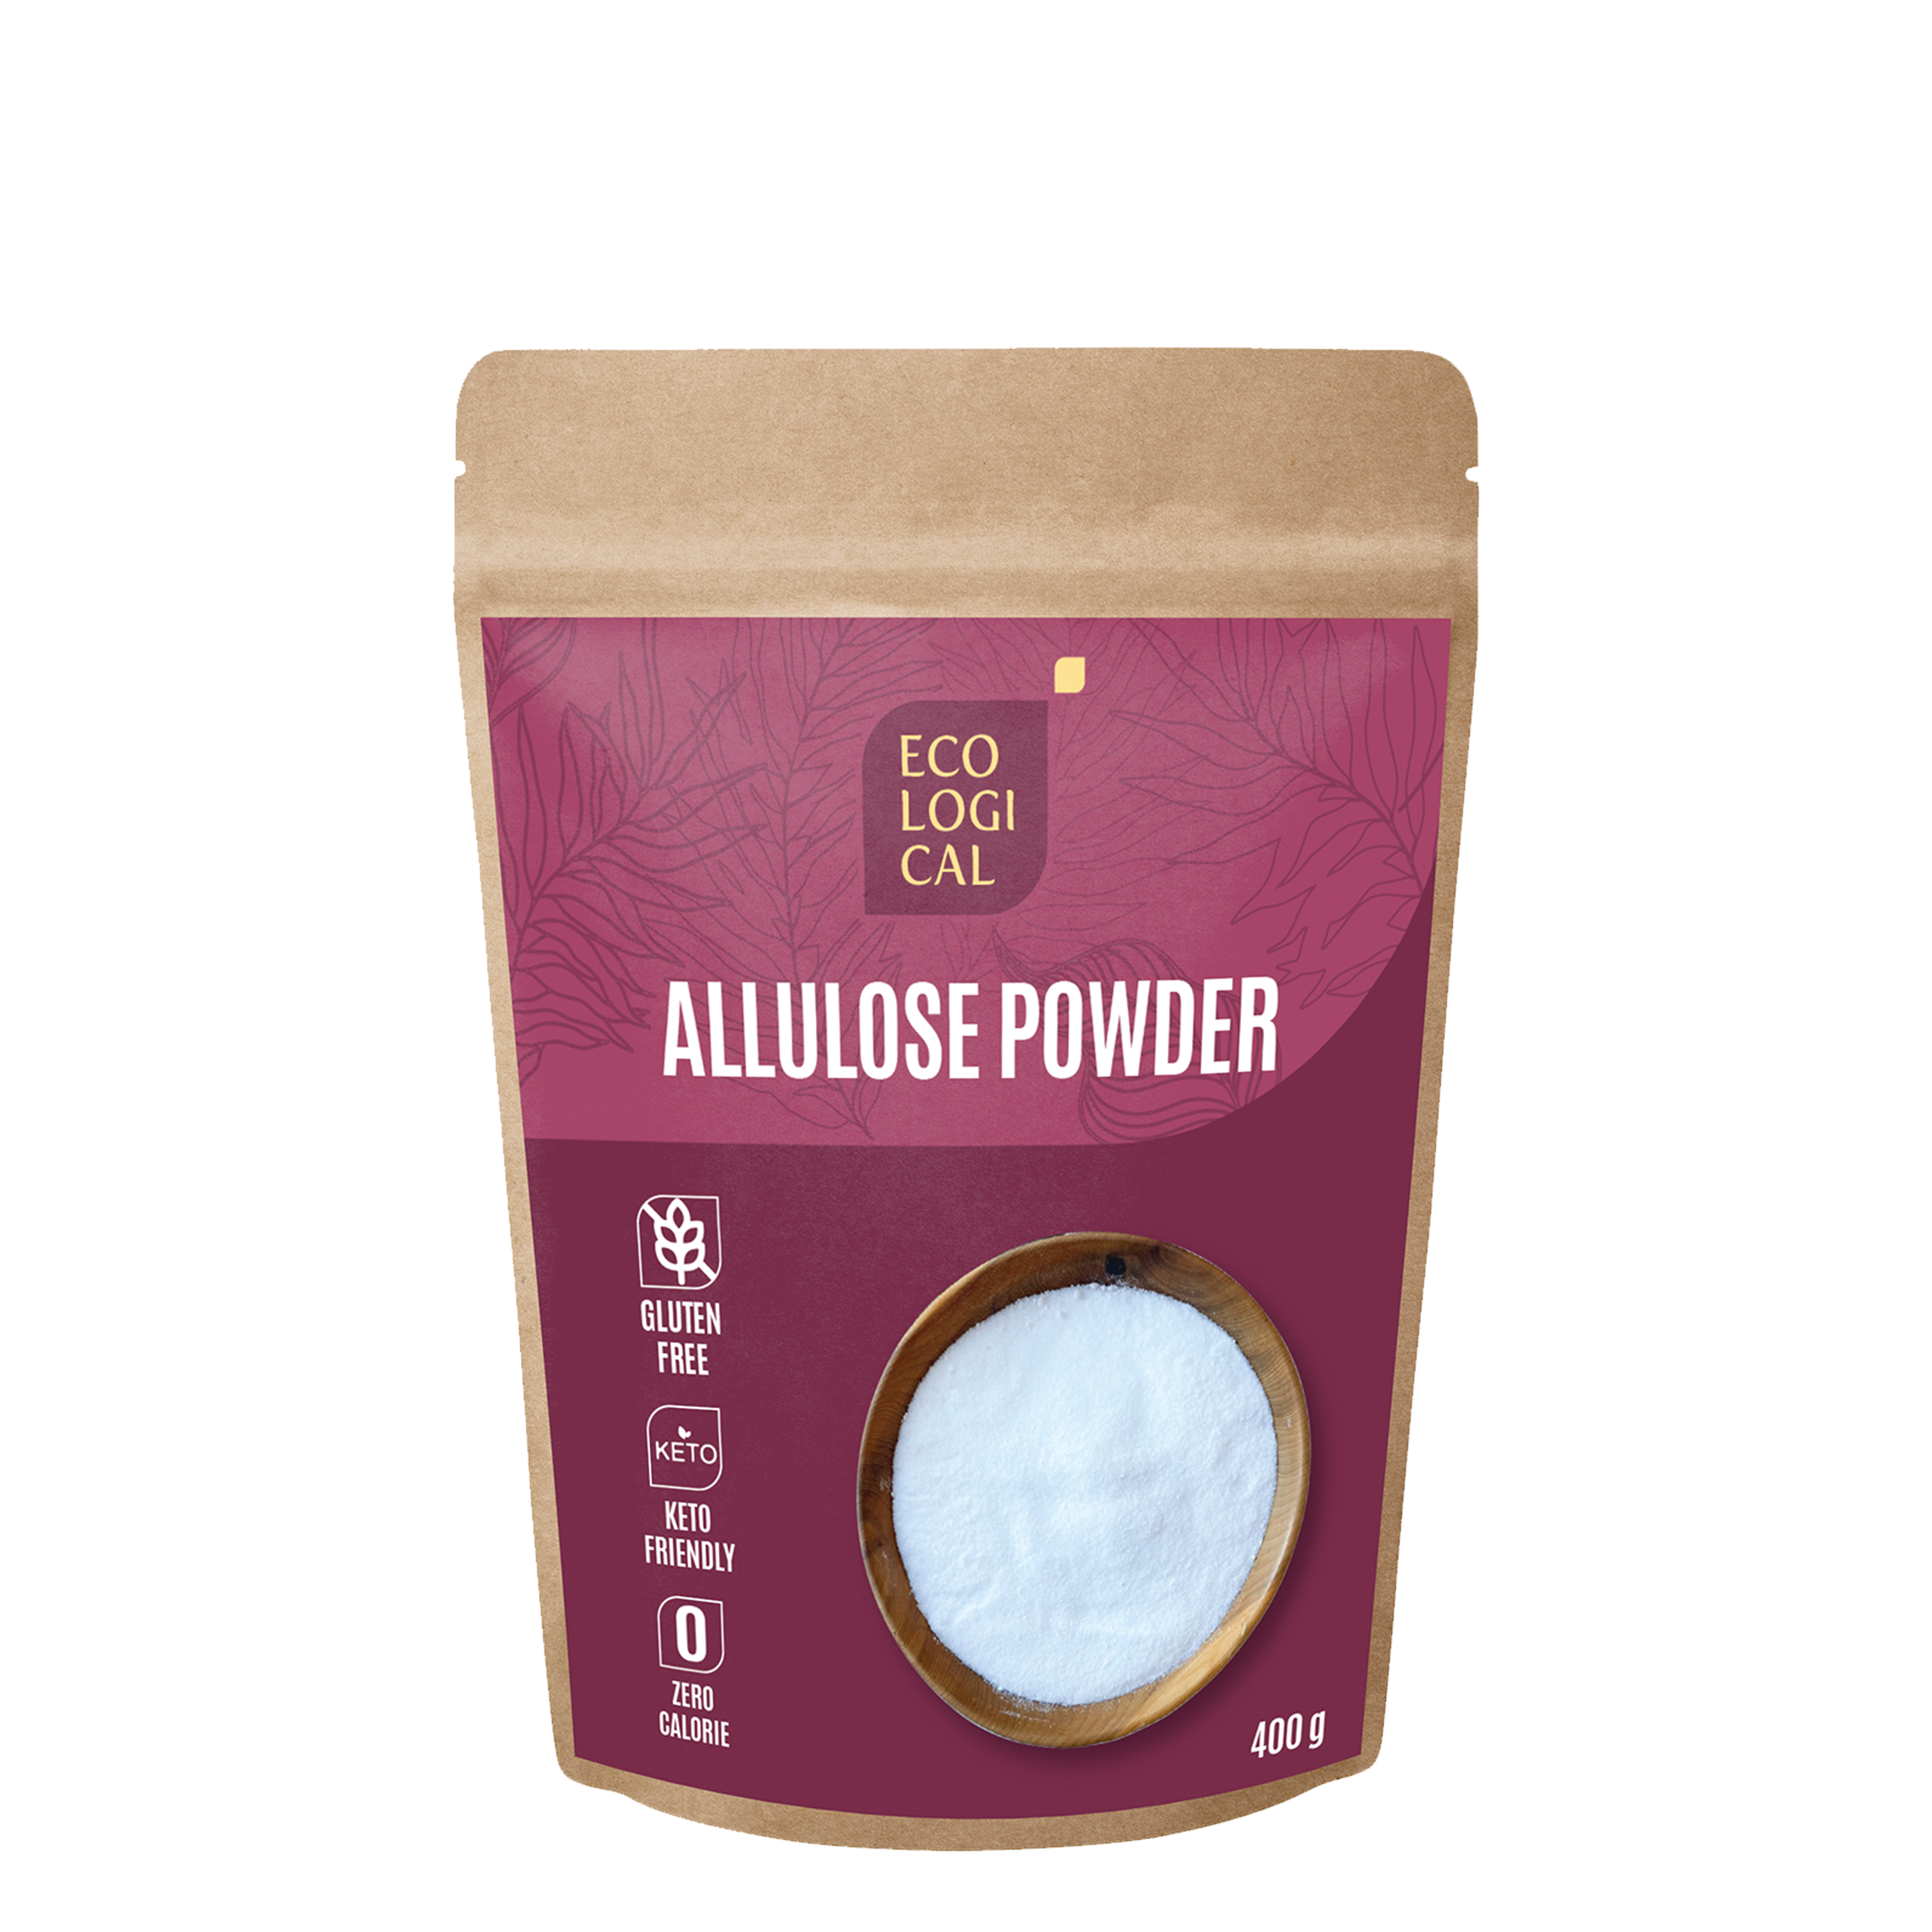 ECOLOGICAL Allulose Powder, 400g - Sweetener